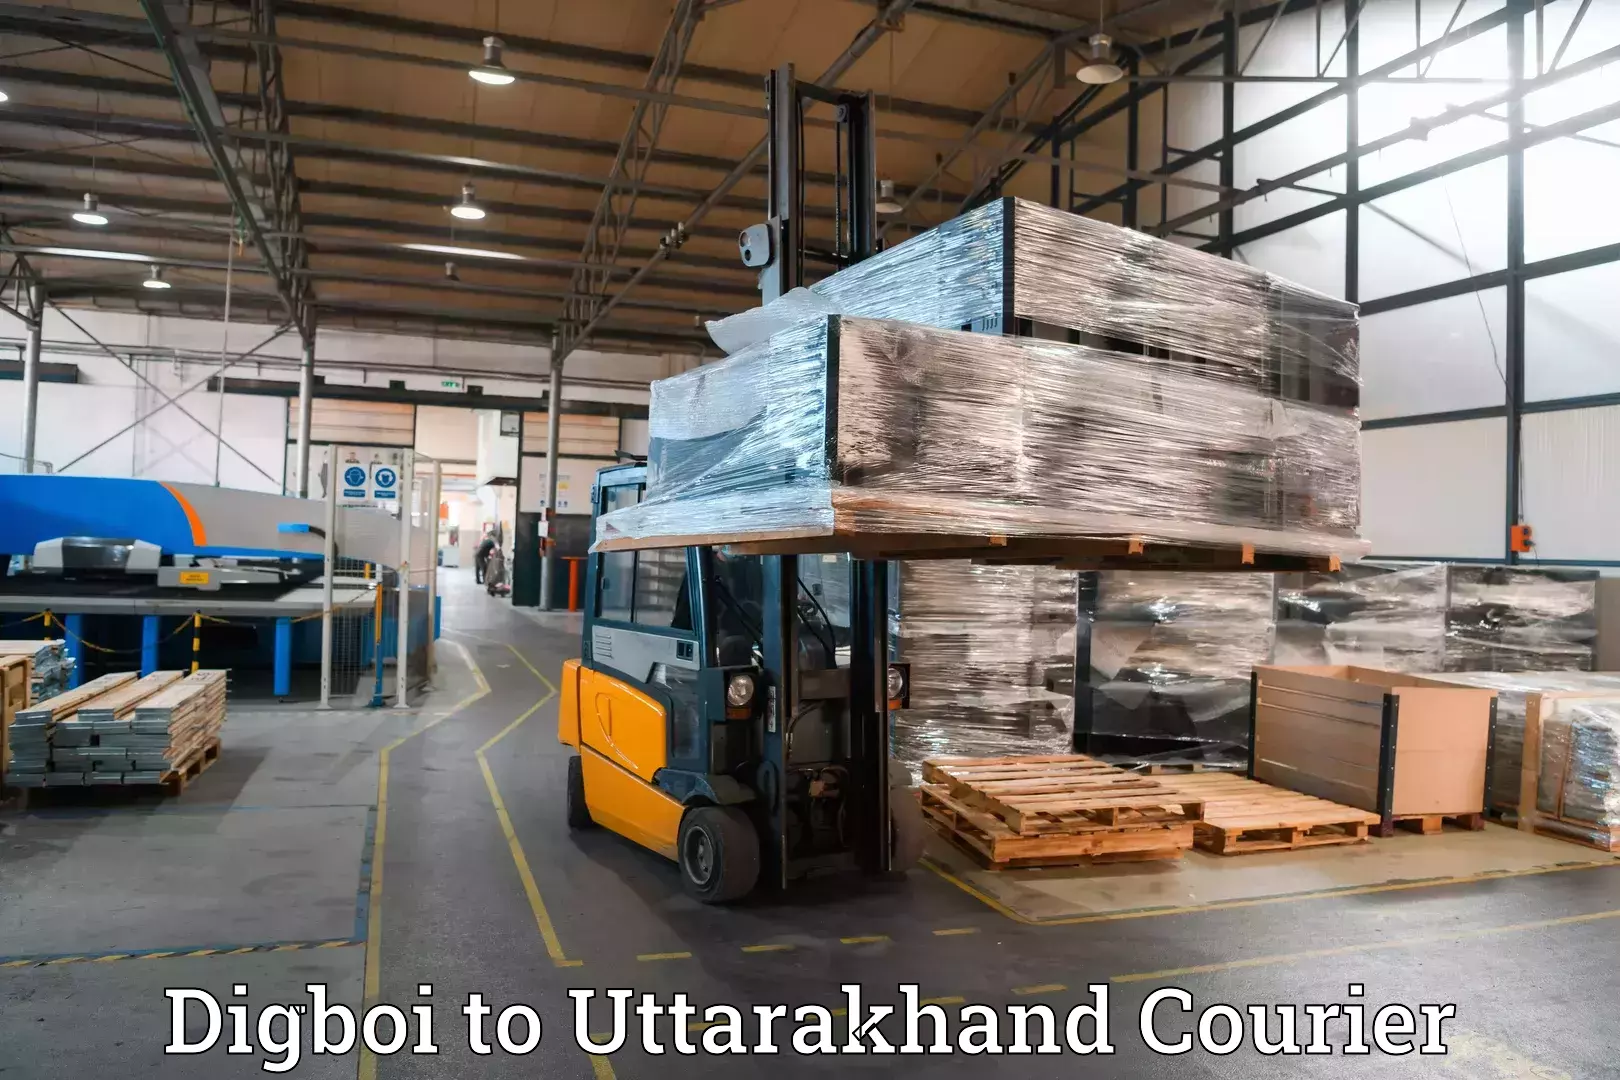 Luggage shipment specialists Digboi to Uttarakhand